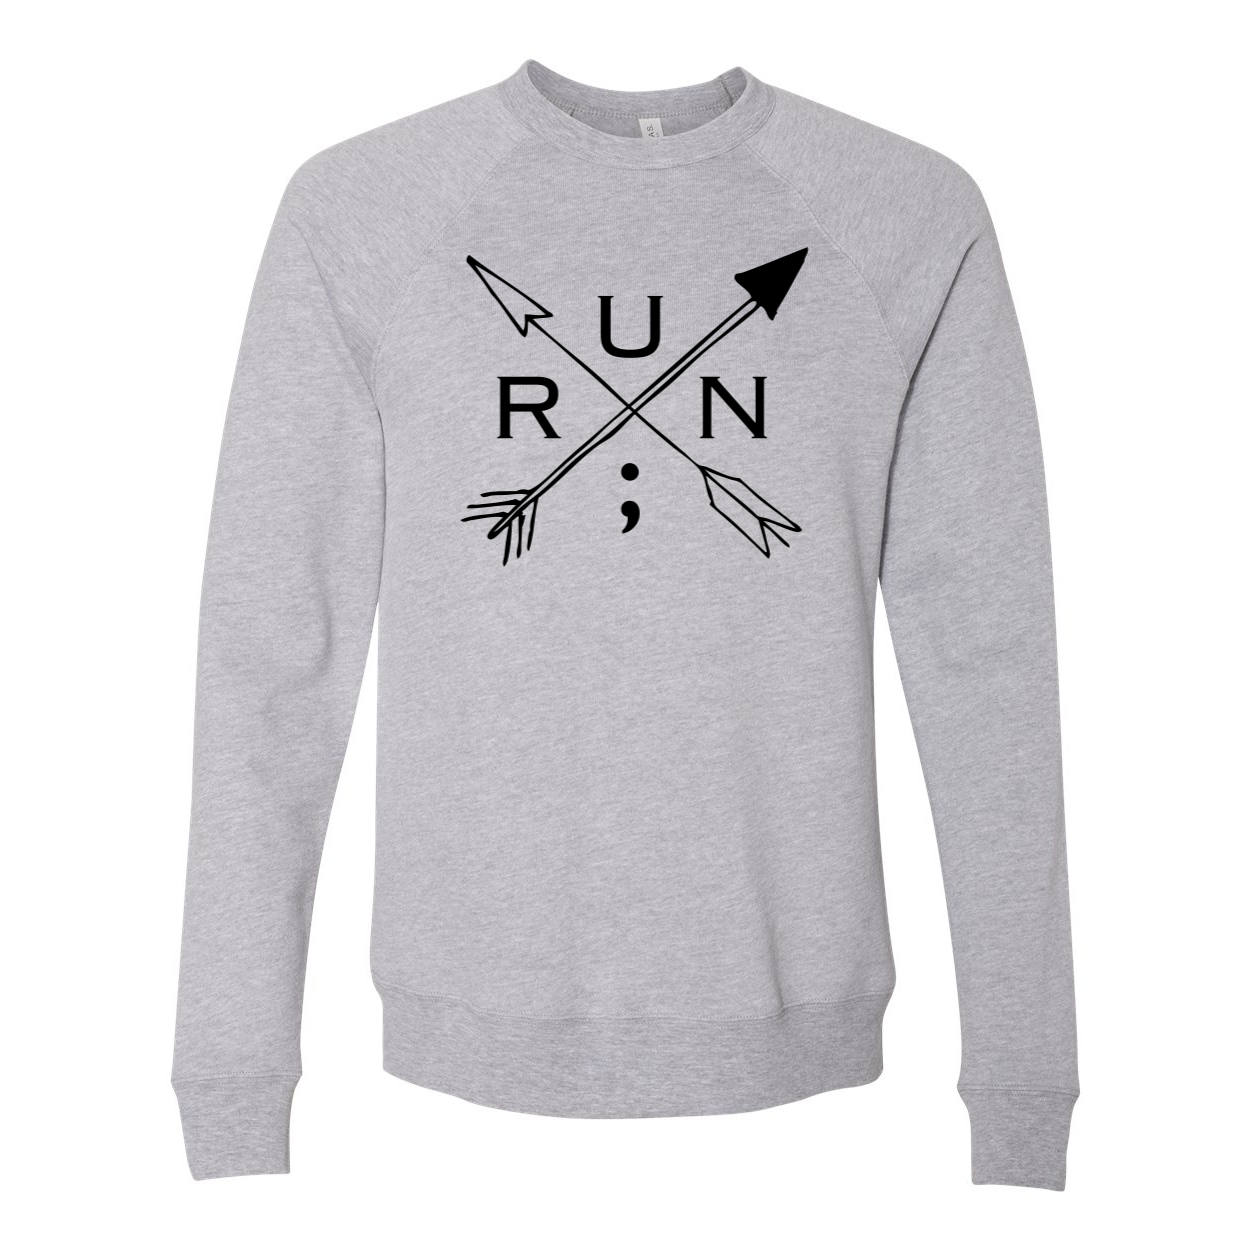 Run Arrows - Unisex Crewneck